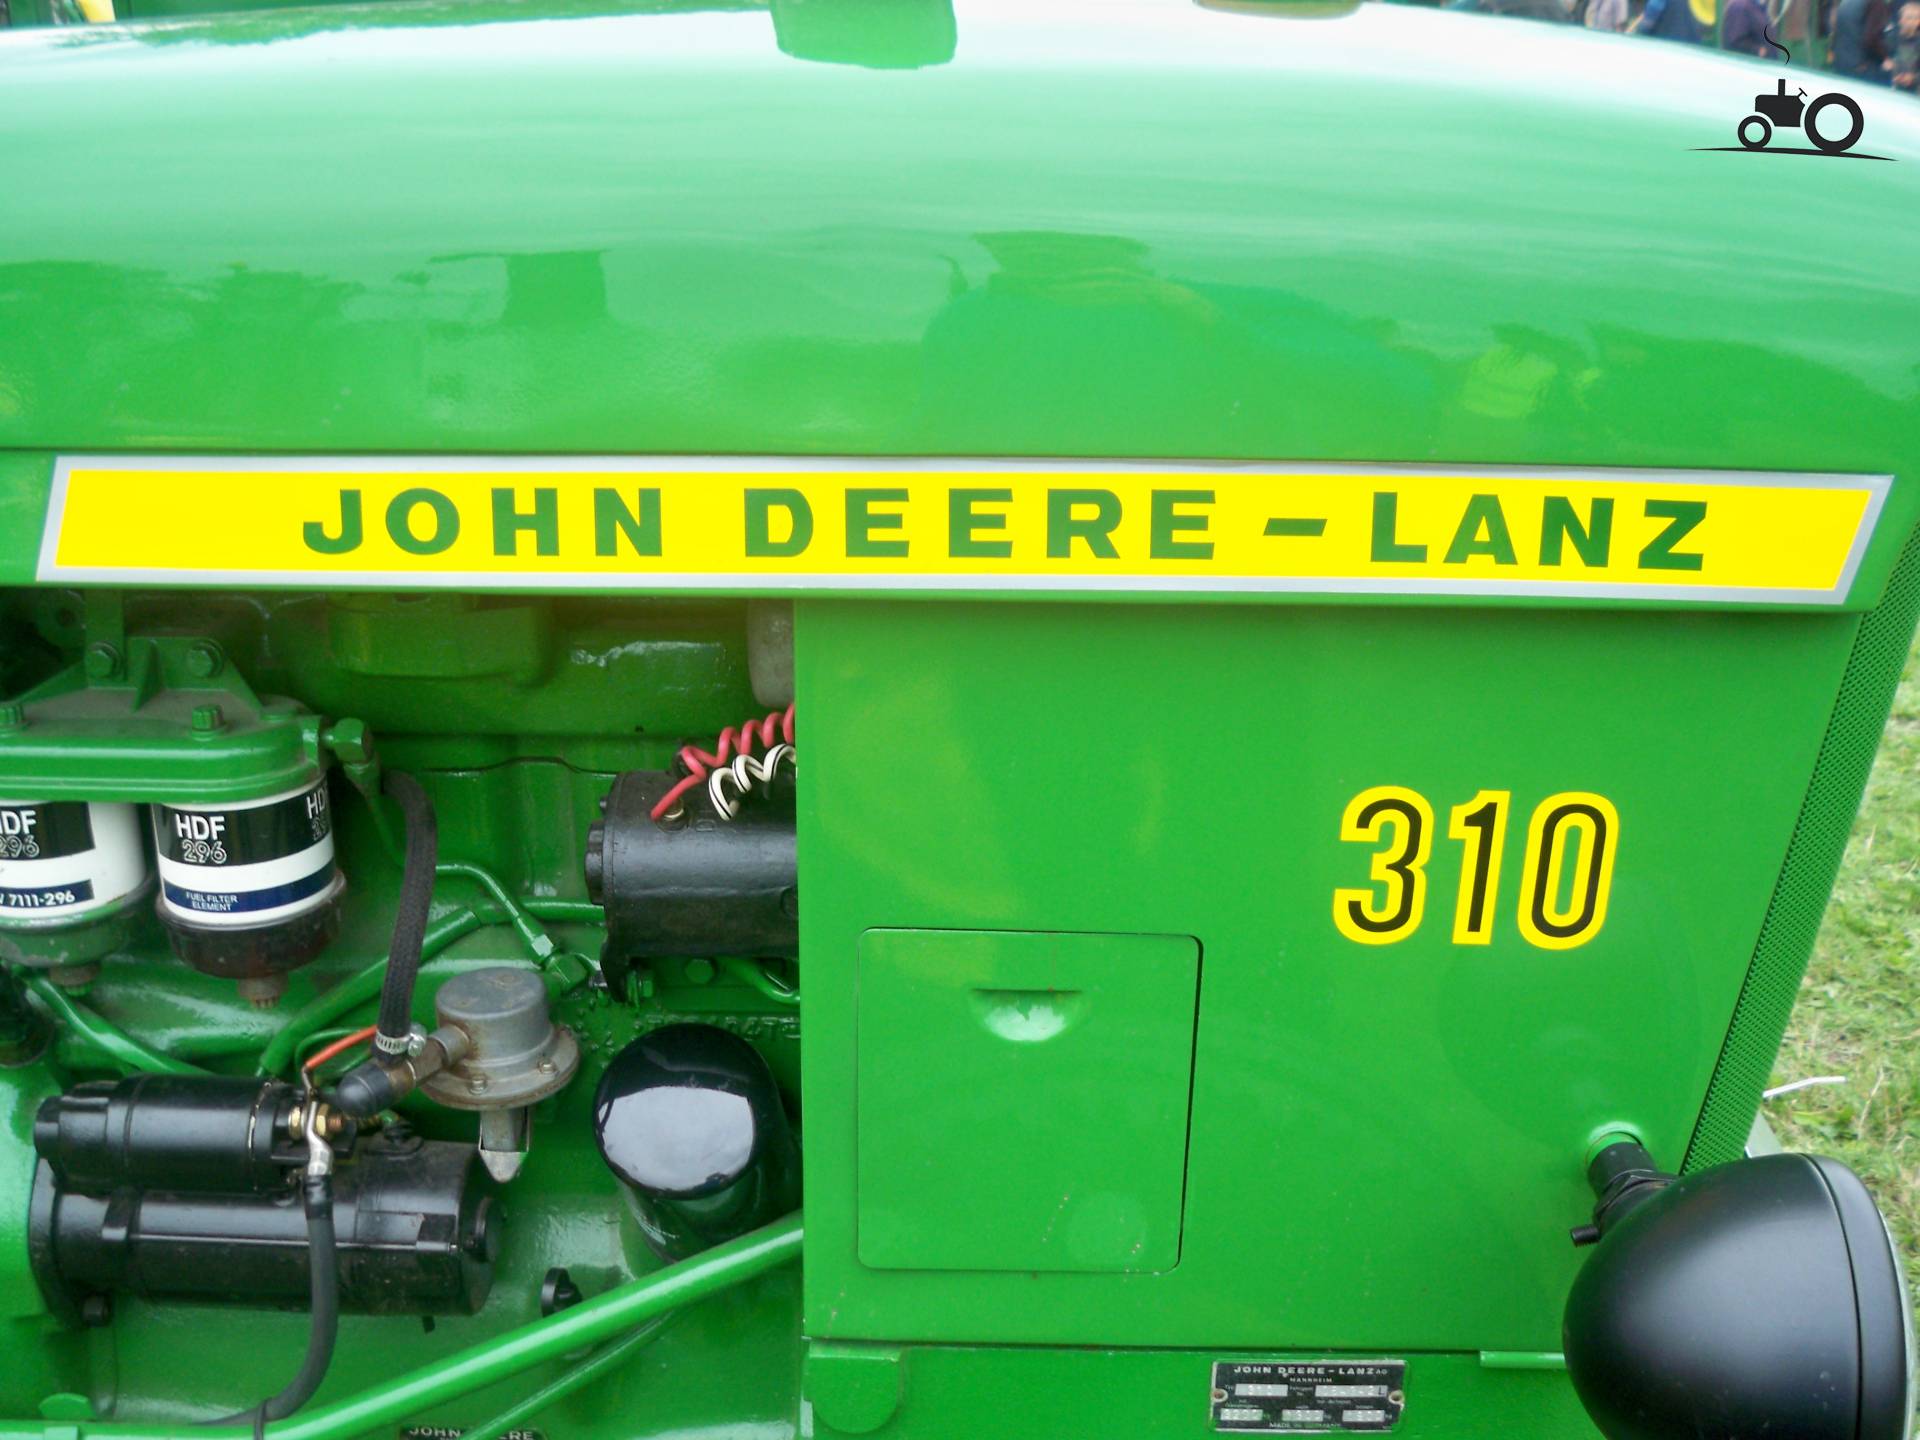 John Deere Lanz 310